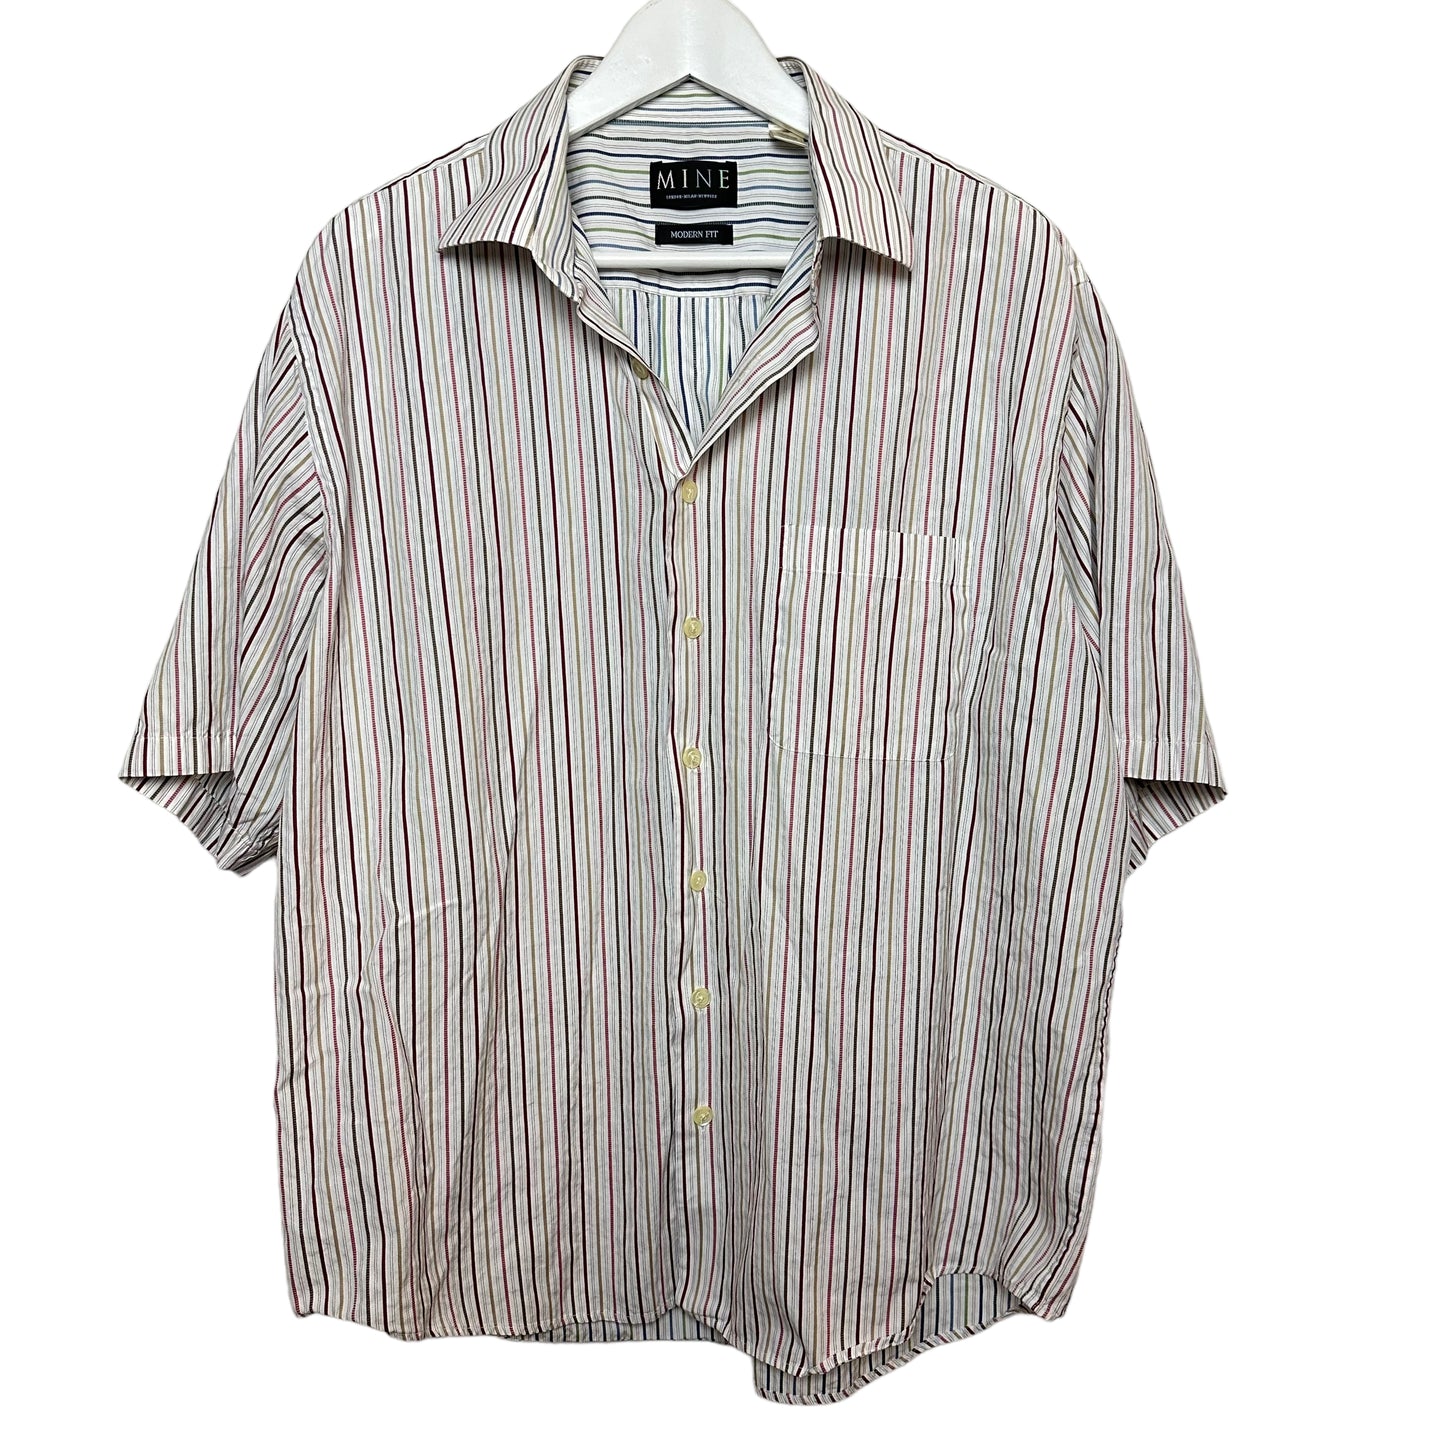 MINE Modern Fit Short Sleeve Button Down Striped Shirt XL Cotton